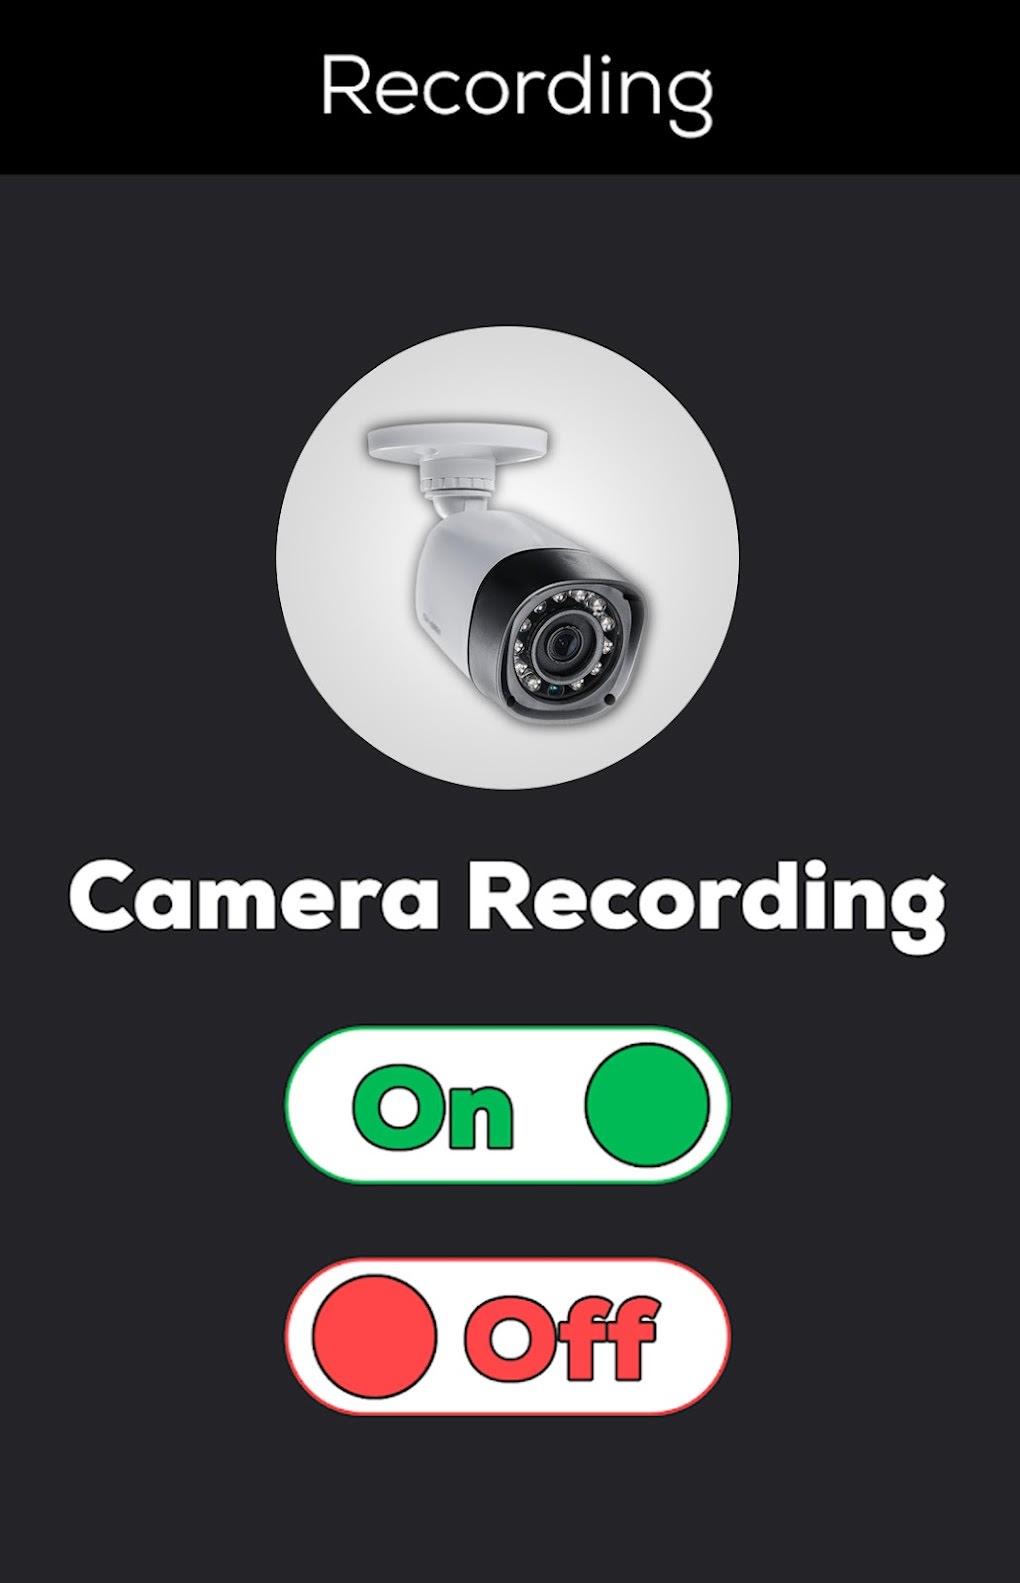 CCTV Camera Hacker Simulator for Android - Download